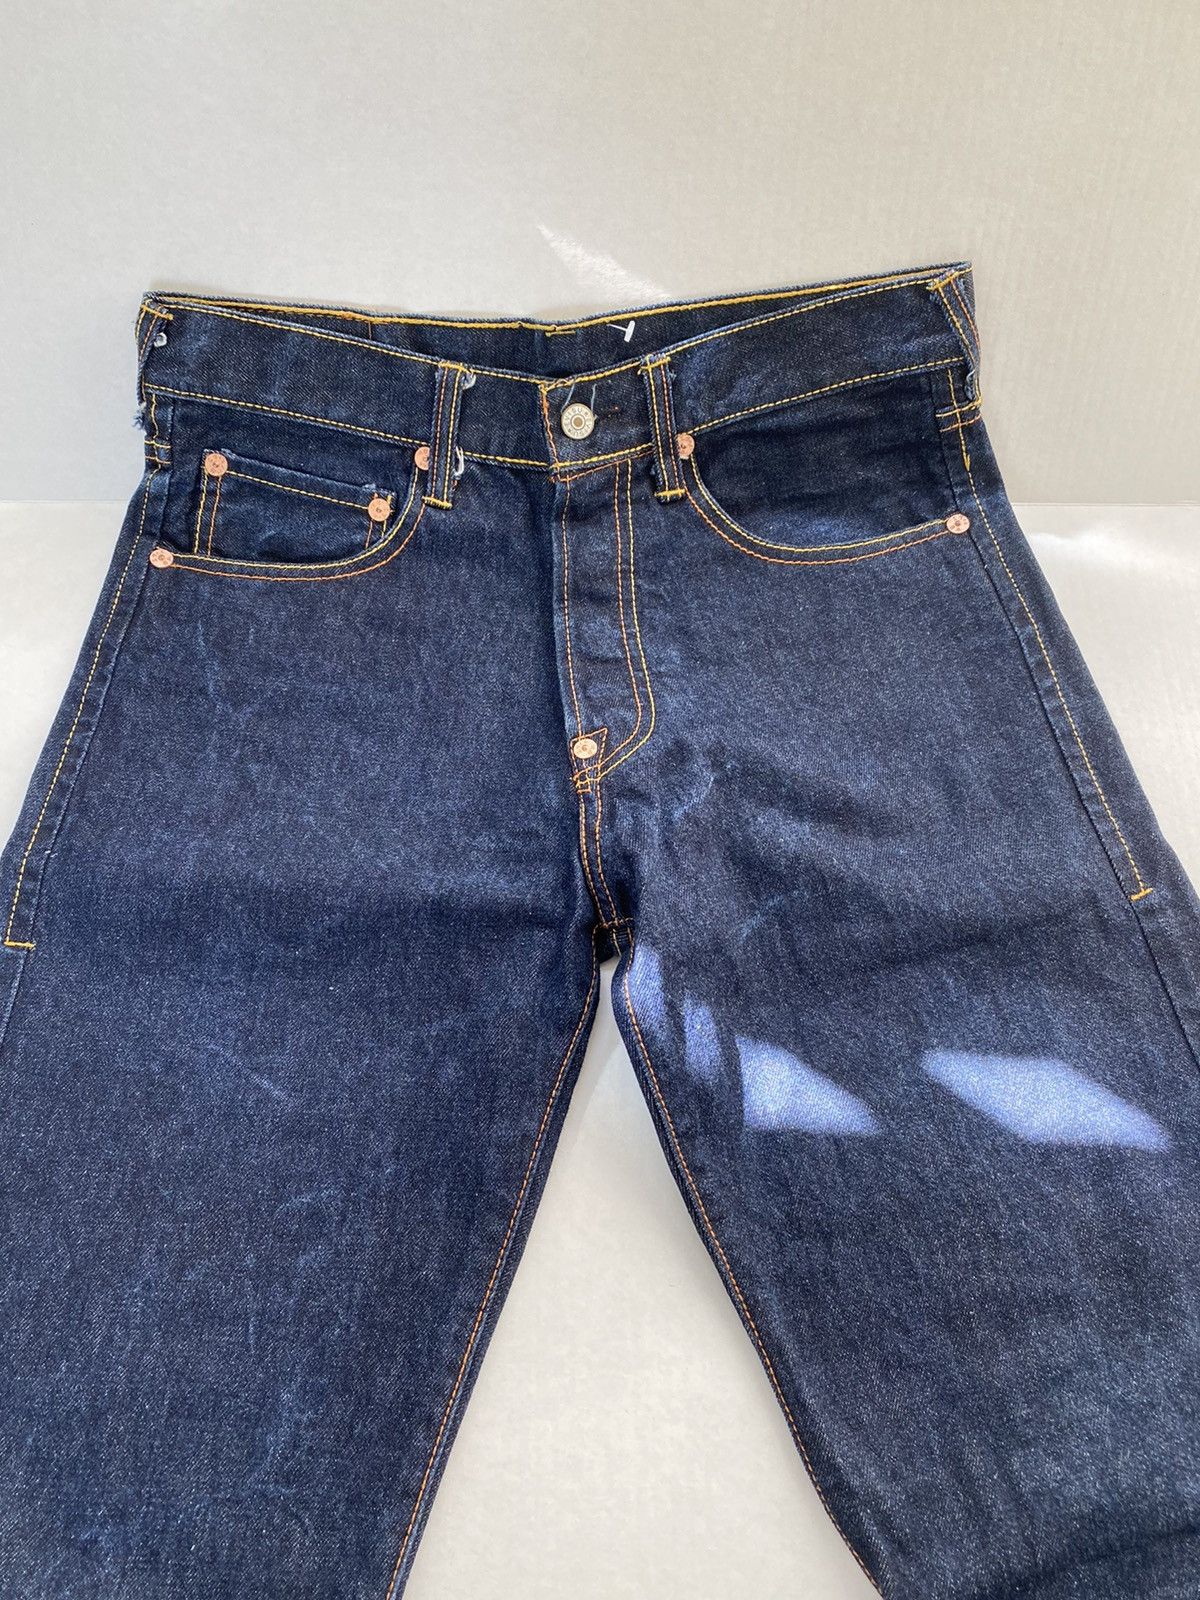 Vintage Vintage Evisu raw denim jeans Size US 30 / EU 46 - 8 Thumbnail